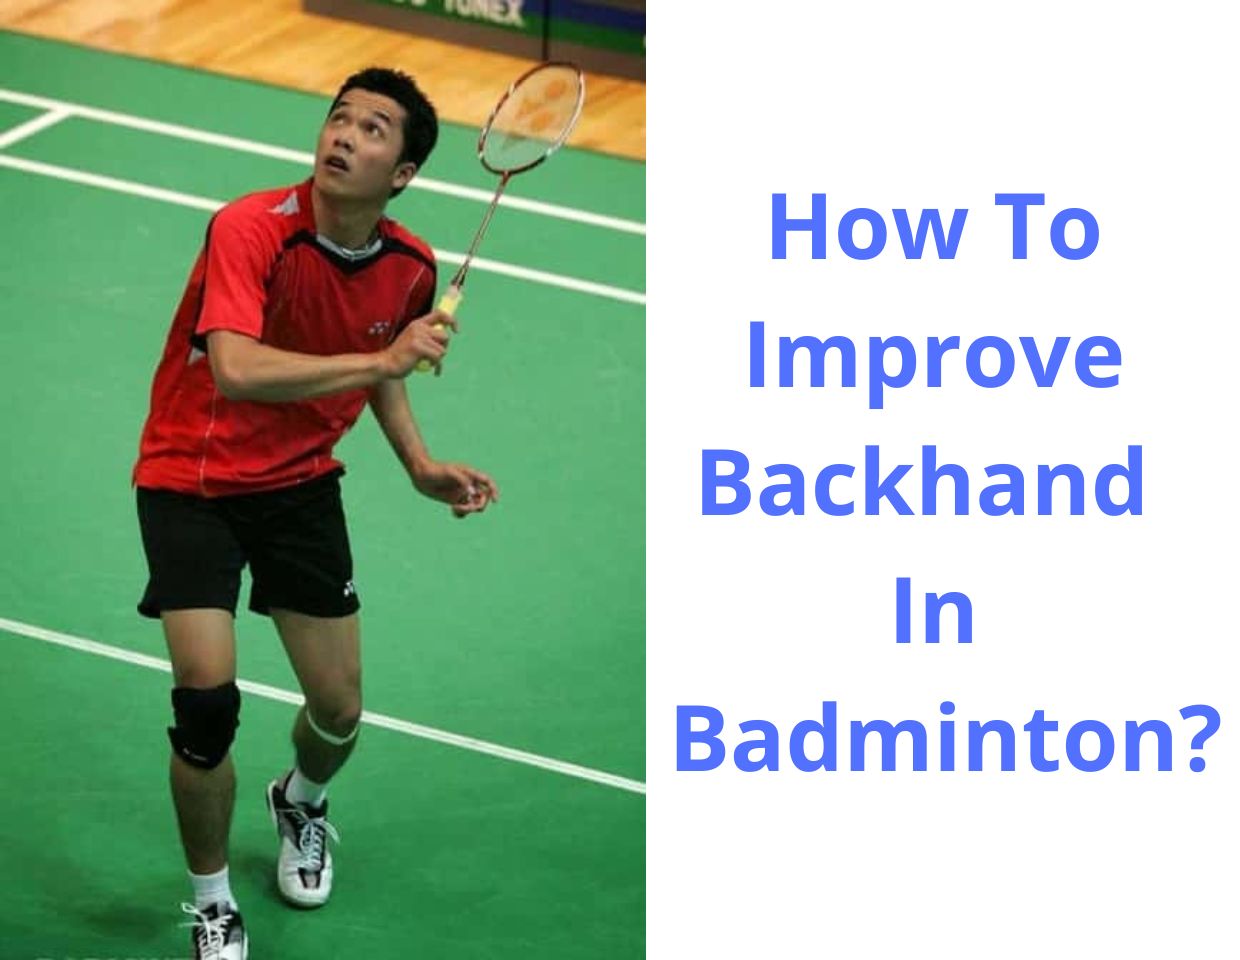 Improve Backhand In Badminton